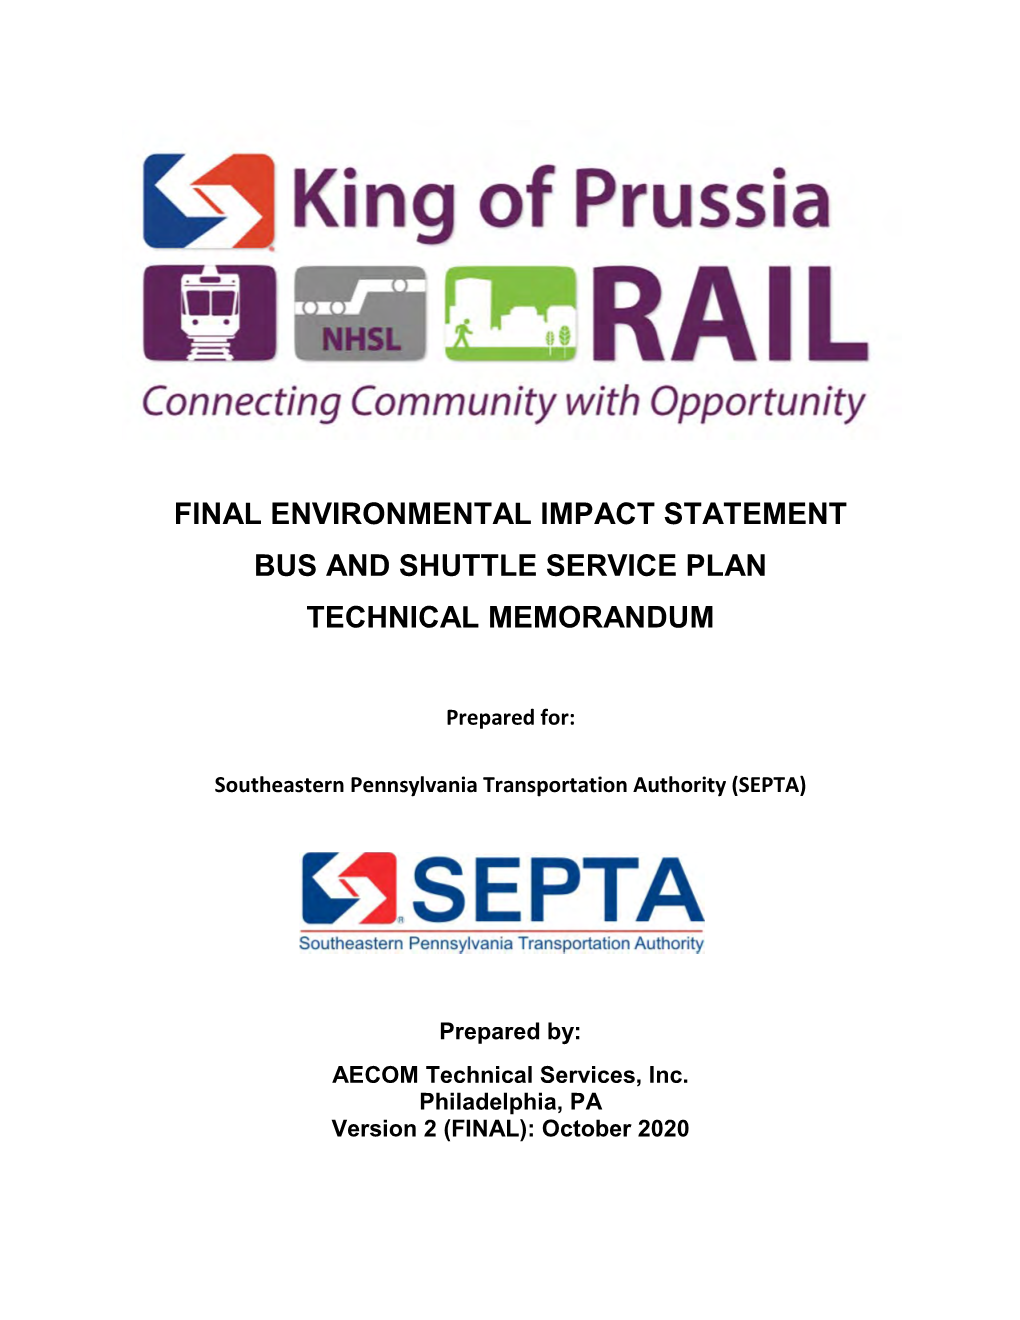 King of Prussia Rail Bus and Shuttle Service Plan Technical Memorandum